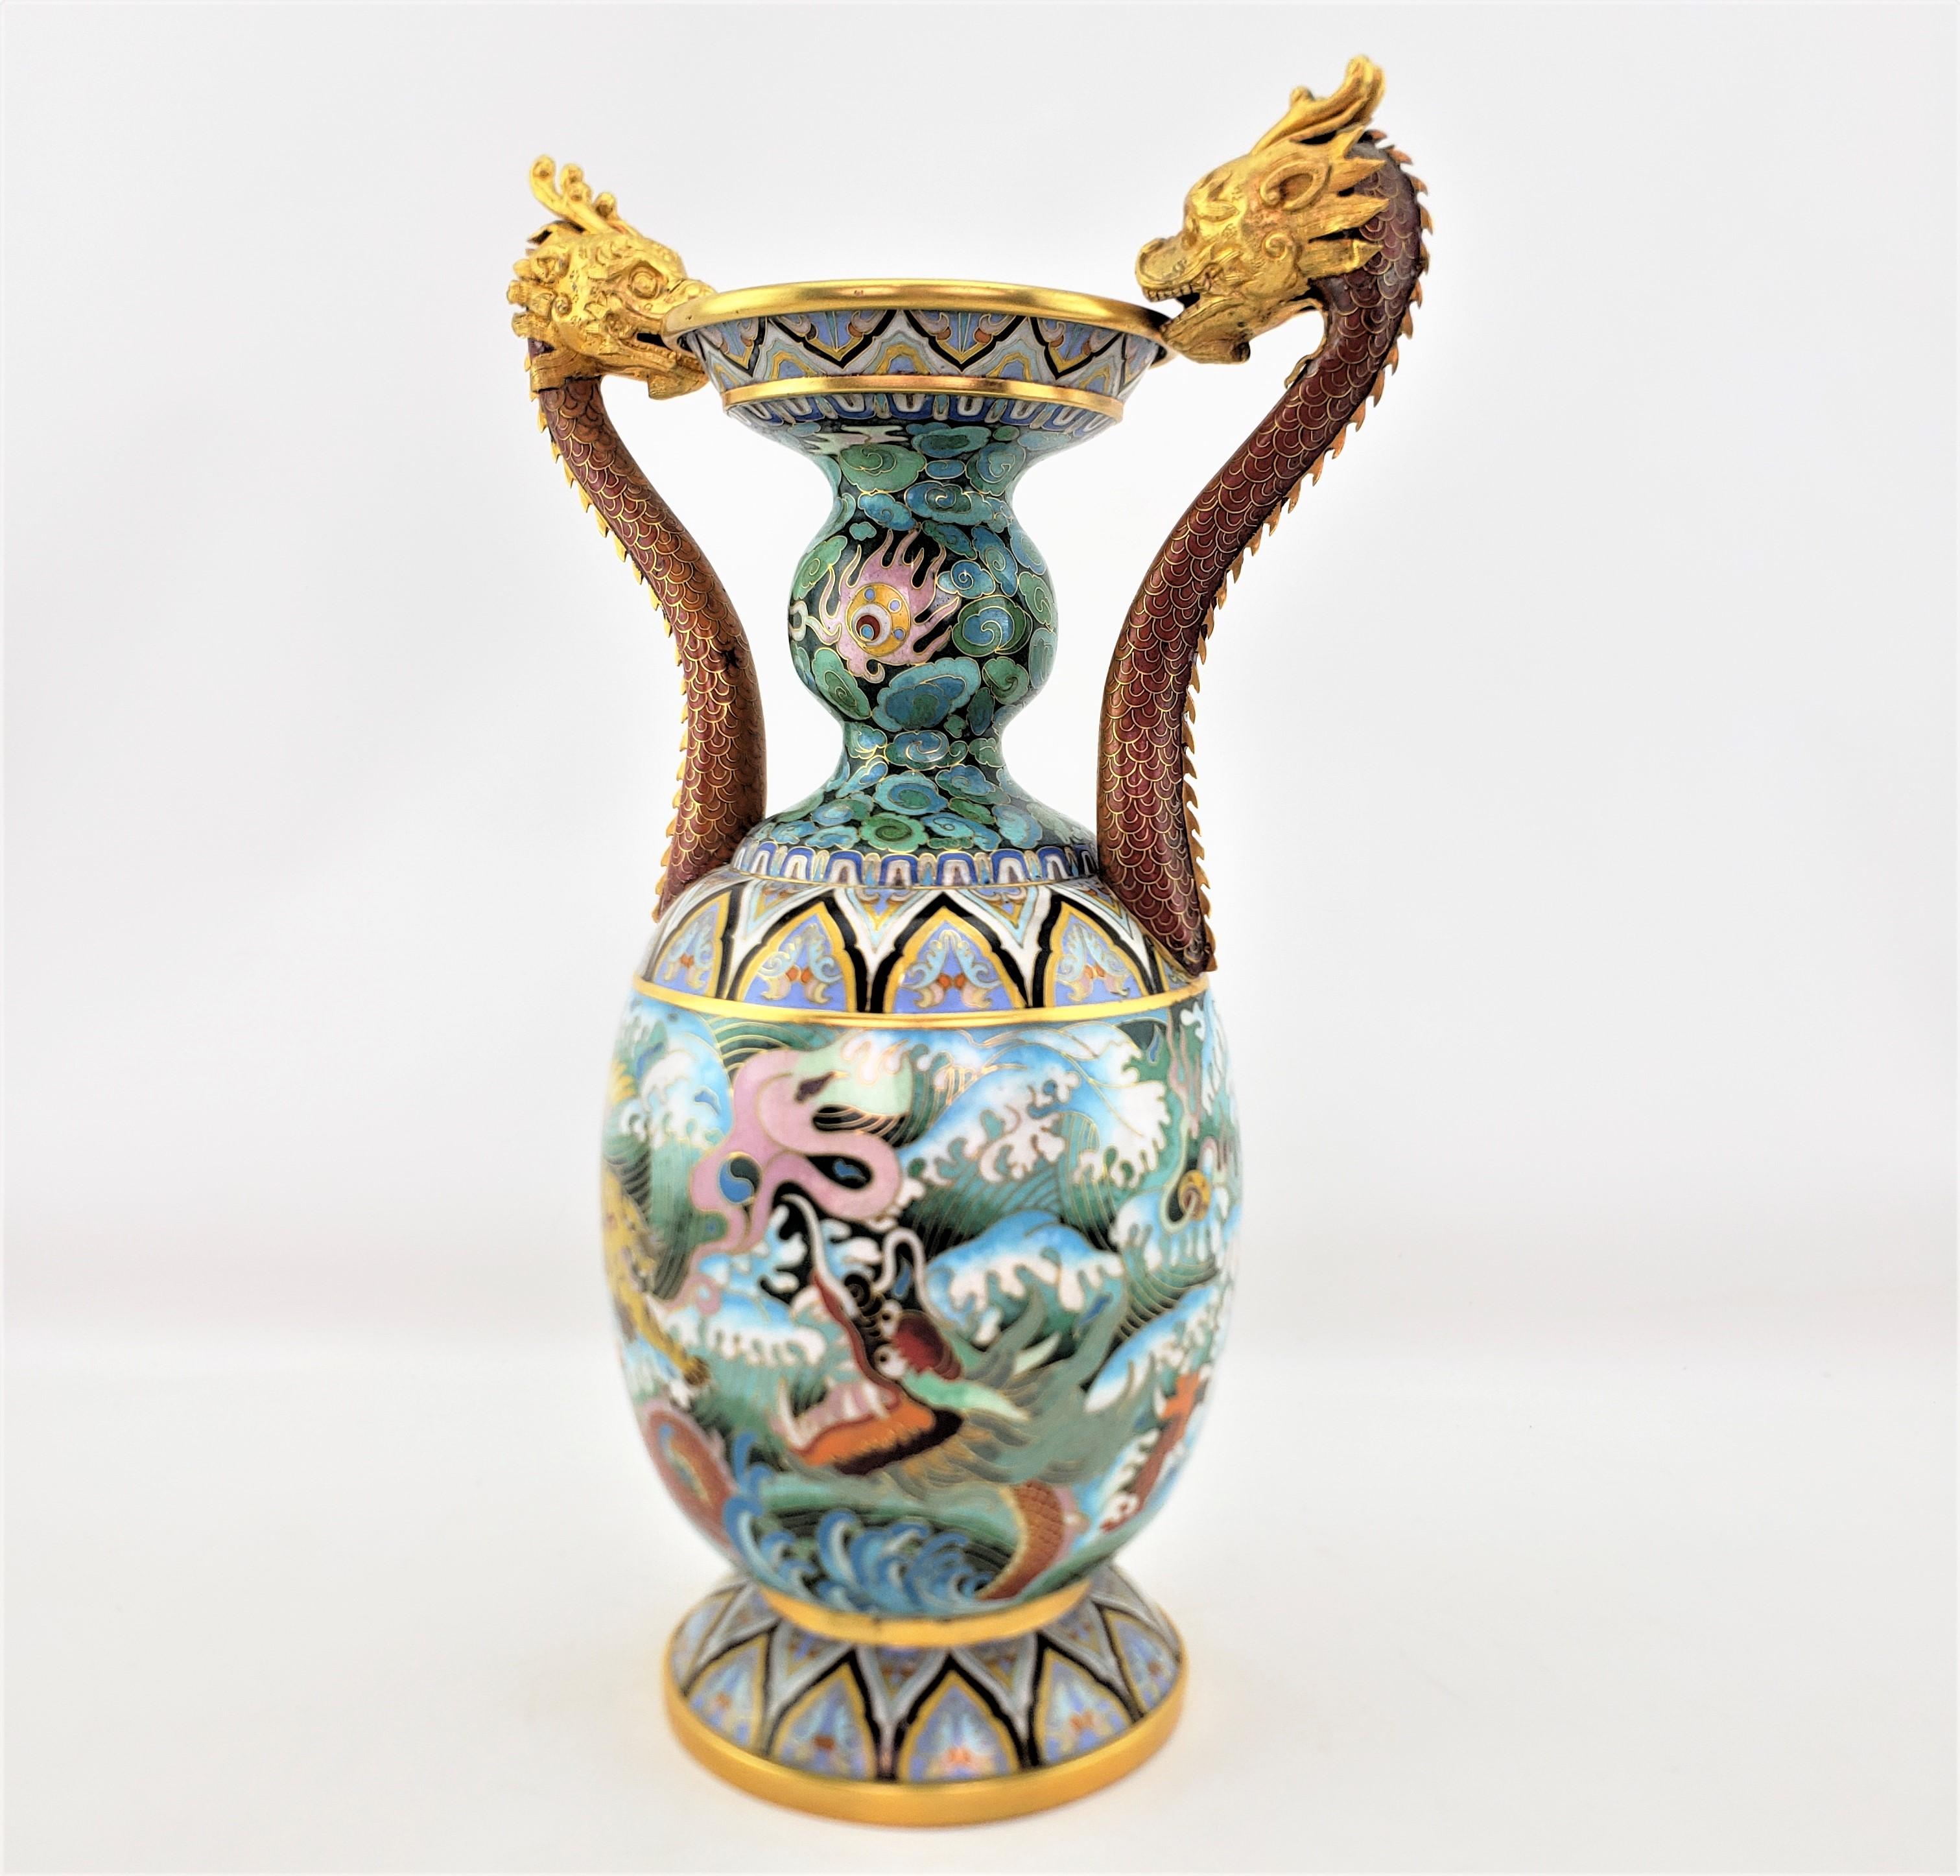 Cloissoné Large Vintage Decorative Chinese Cloissone Vase with Imperial Dragon Handles For Sale